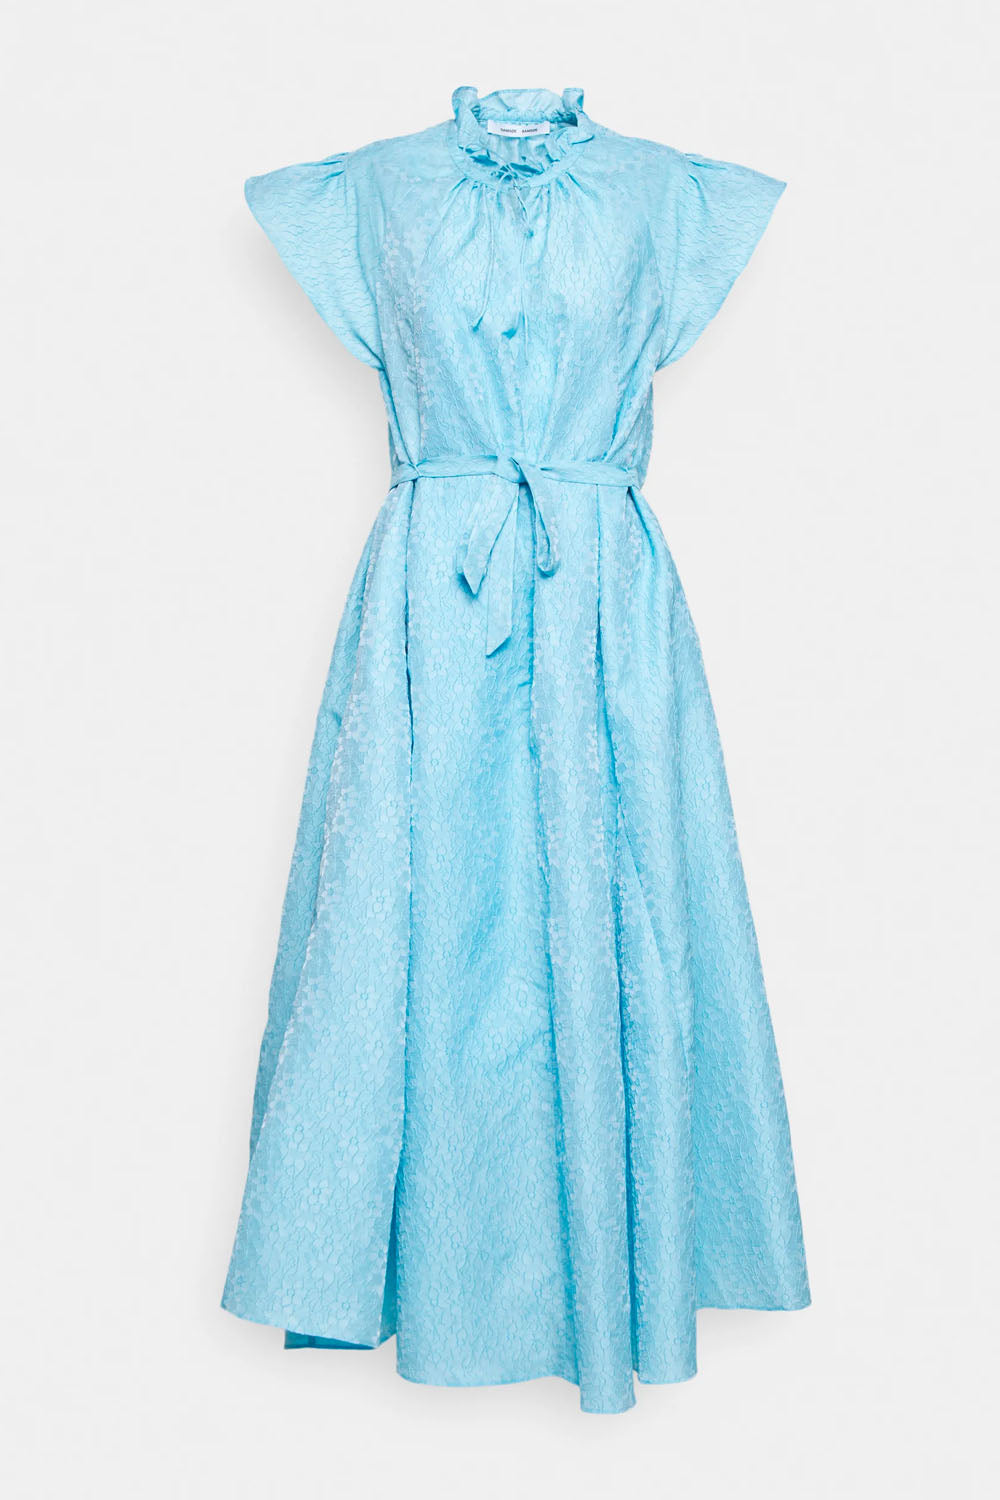 Samsoe Samsoe - Karookh Maxi Dress: Blue Topaz